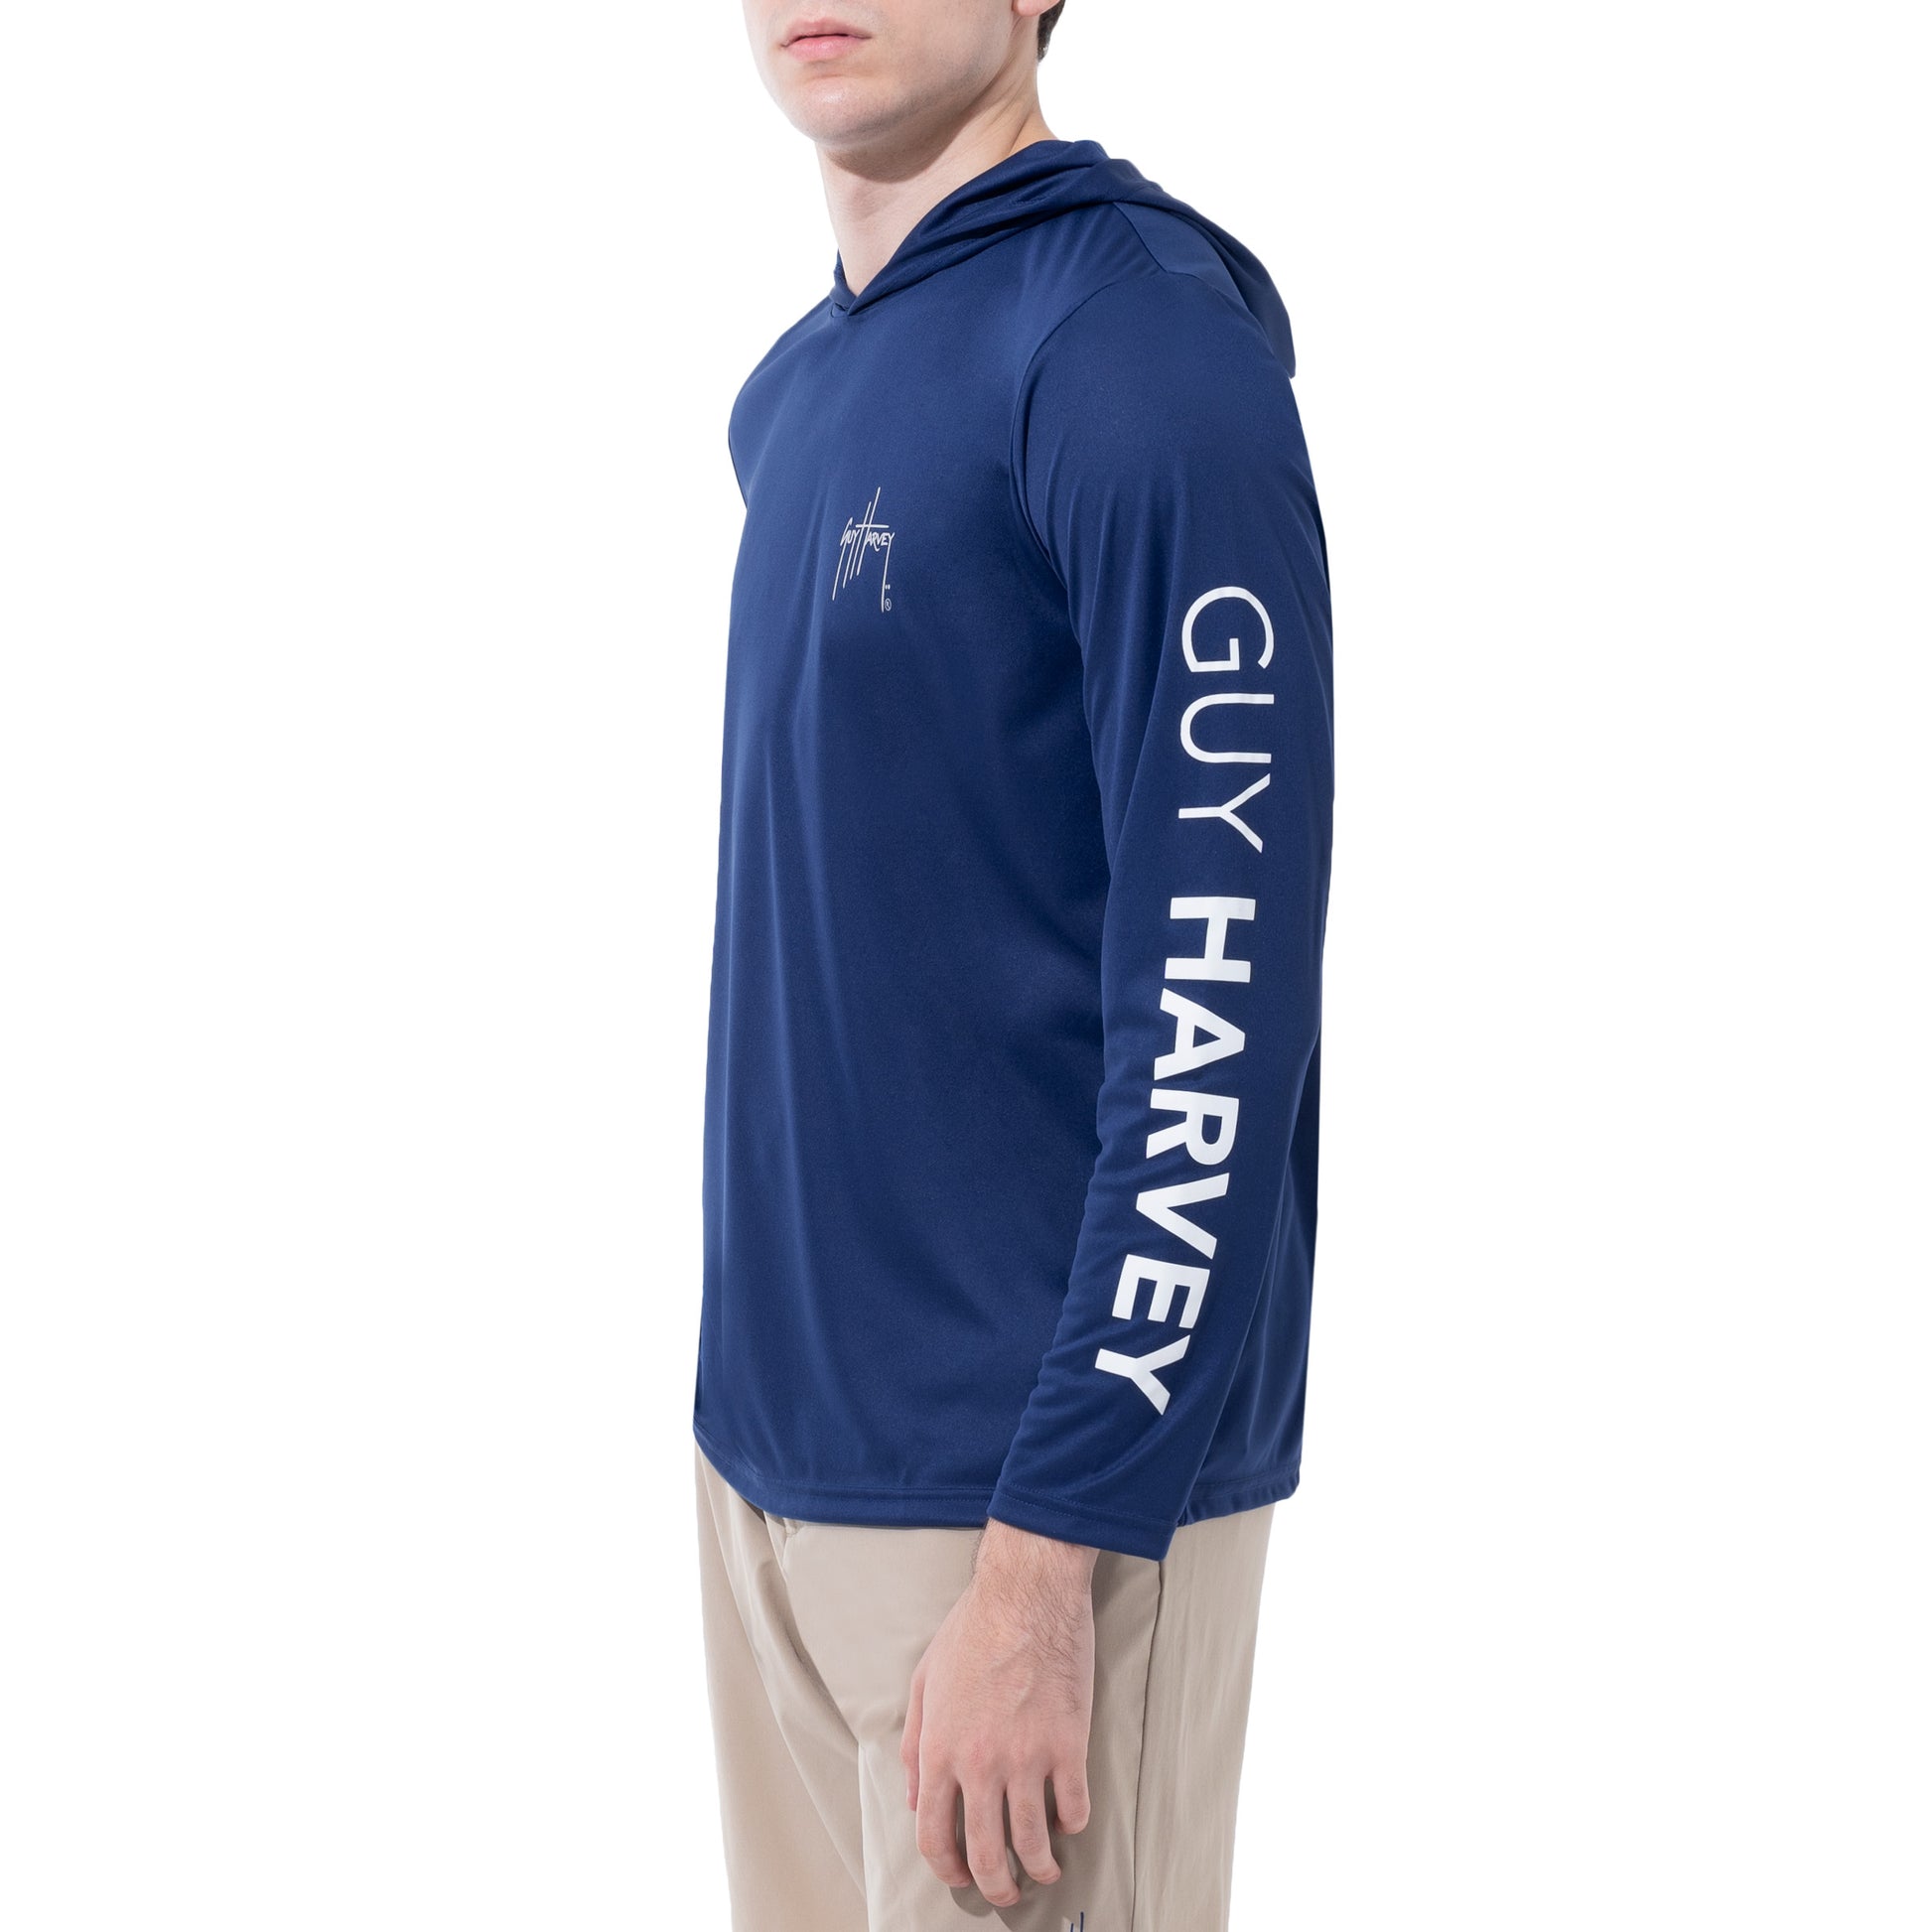 Guy Harvey | Men's Sail Patrol Performance Fishing Sun Protection Shirt UPF 50, Small